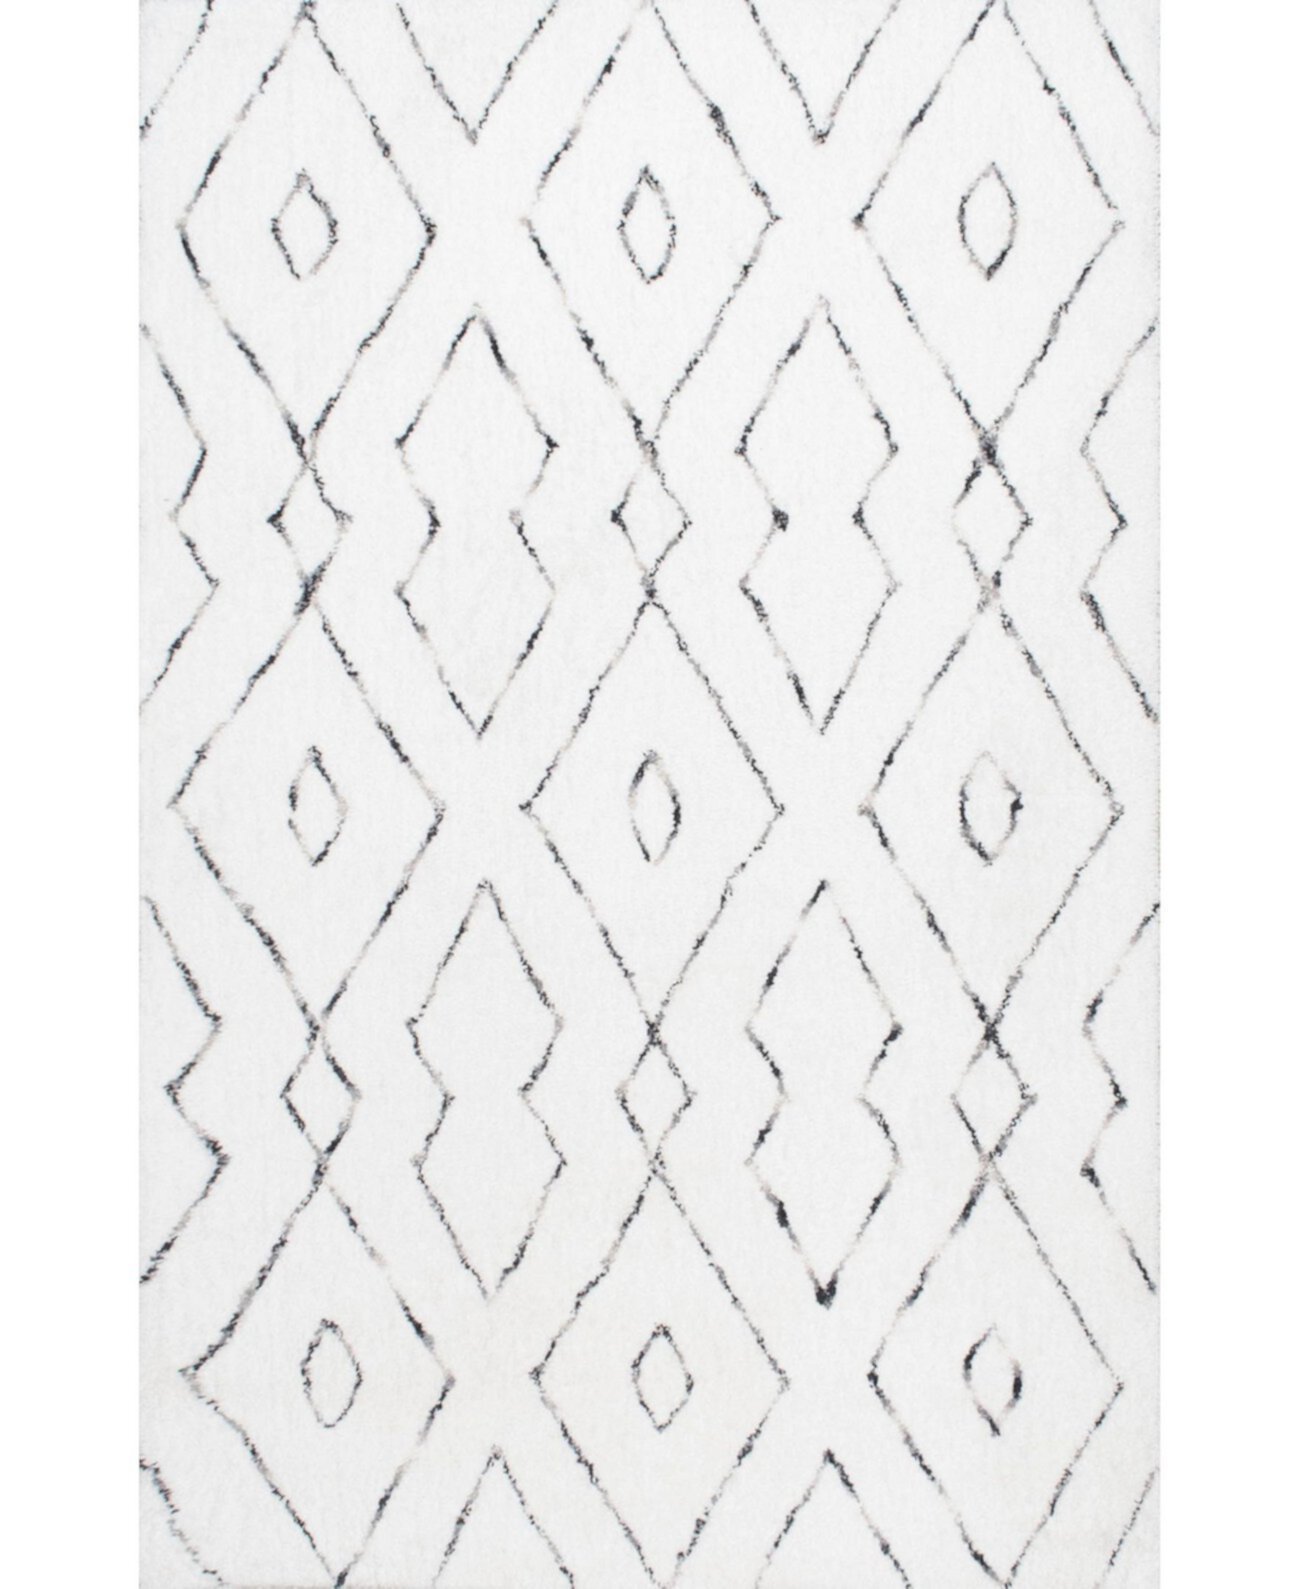 Kazbar Lauren Lattice Белый коврик 2 x 3 фута NuLOOM